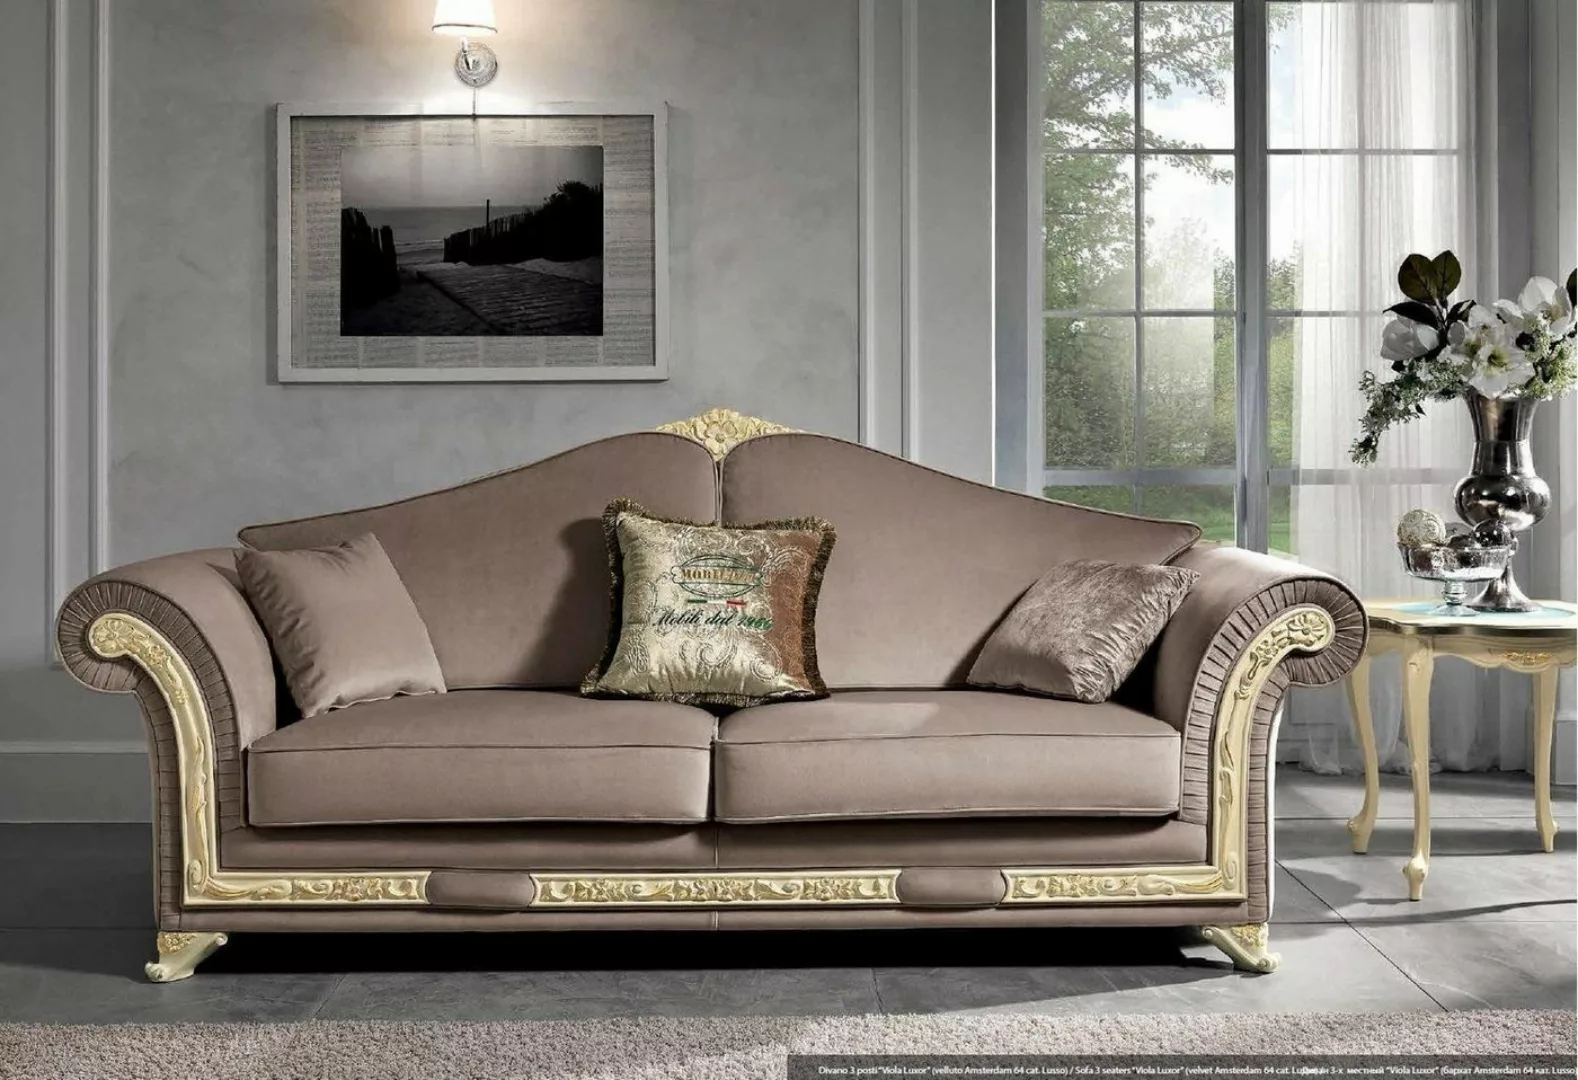 JVmoebel Sofa Sofa 3 Sitzer Luxus Möbel Klassischer Dreisitzer Design Itali günstig online kaufen